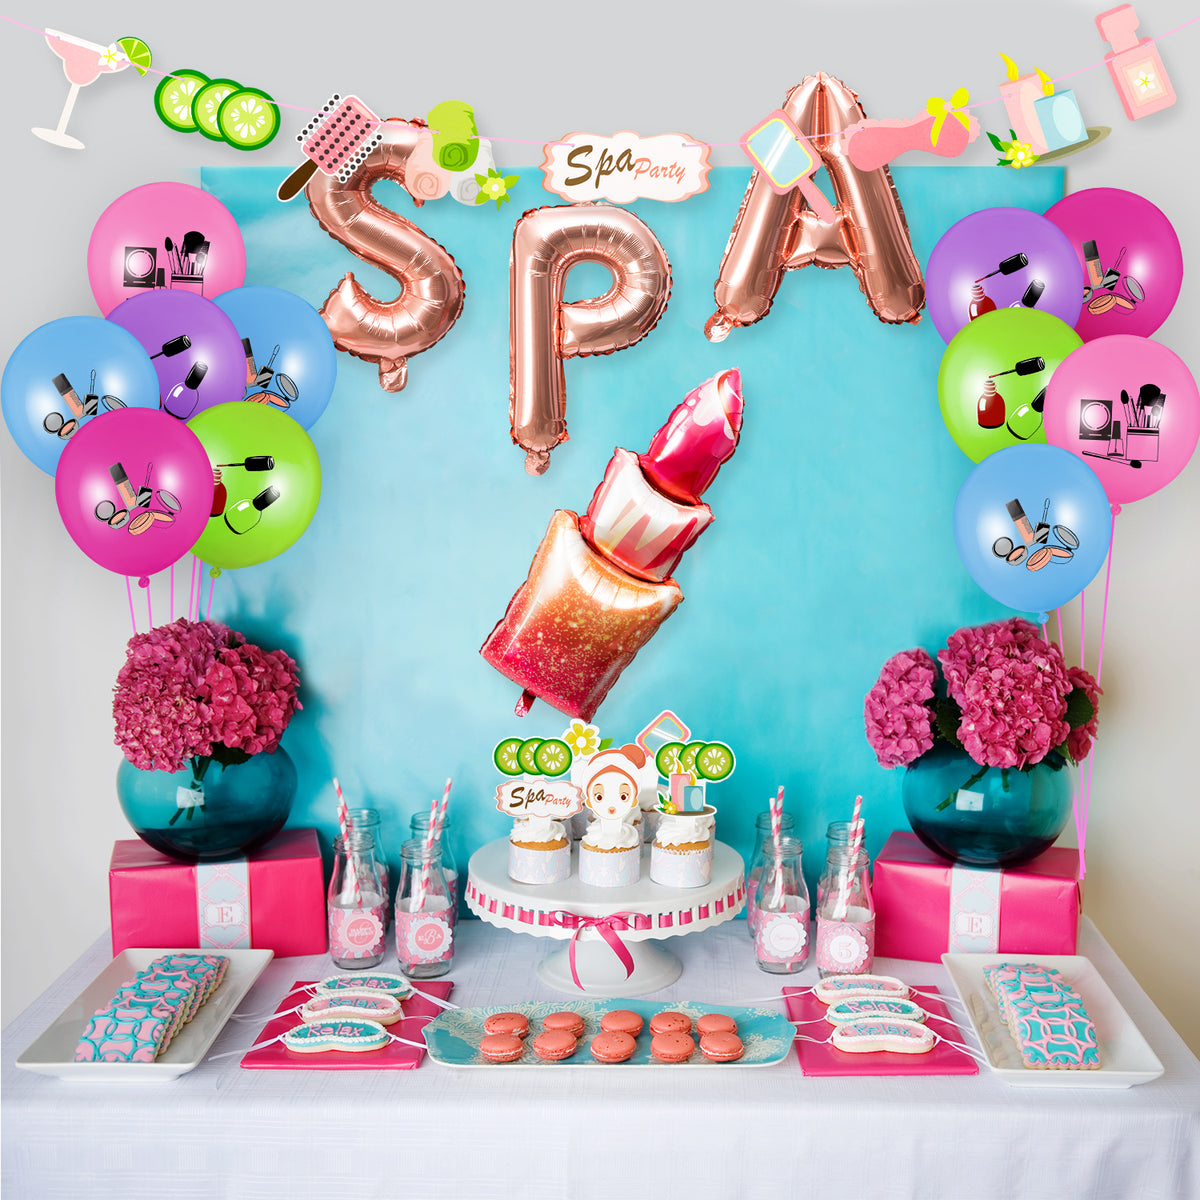 BeYumi 37Packs Spa Theme Party Decorations Kit- Giant SPA Lipstick Foi